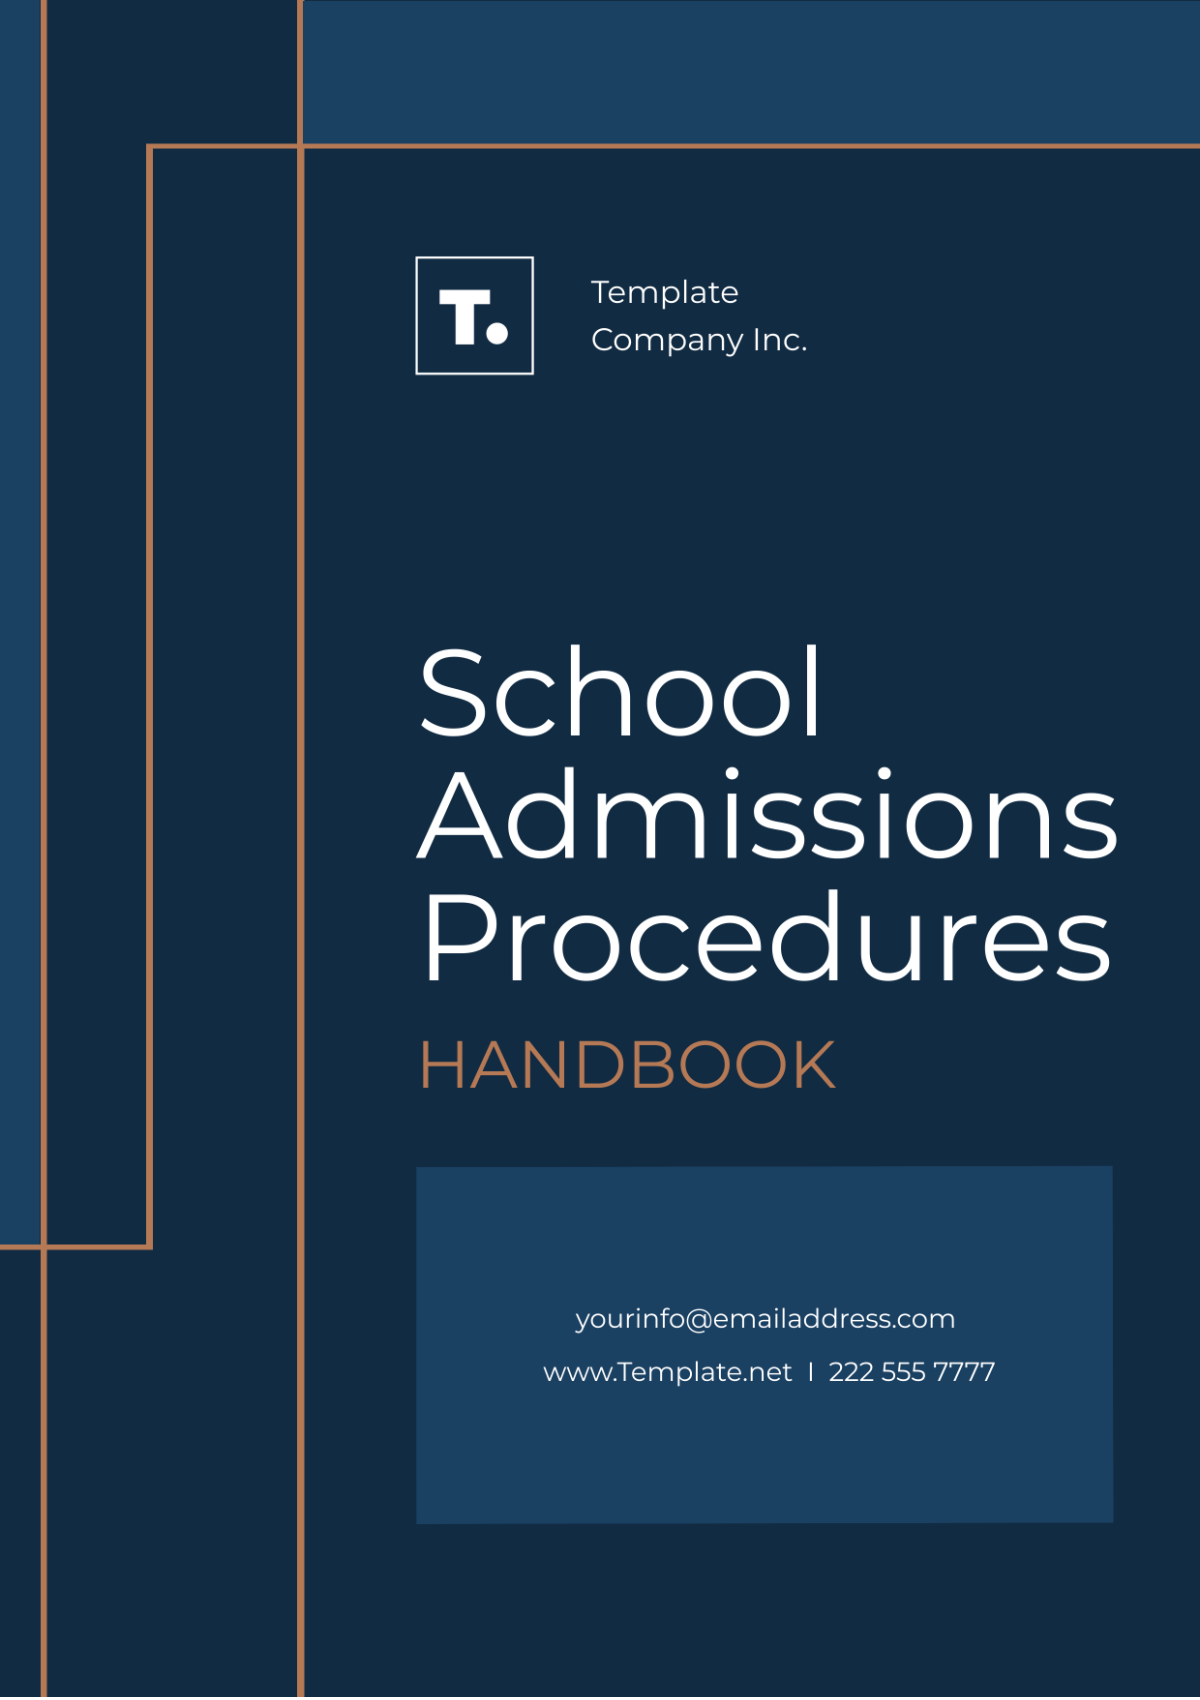 Free School Admissions Procedures Handbook Template